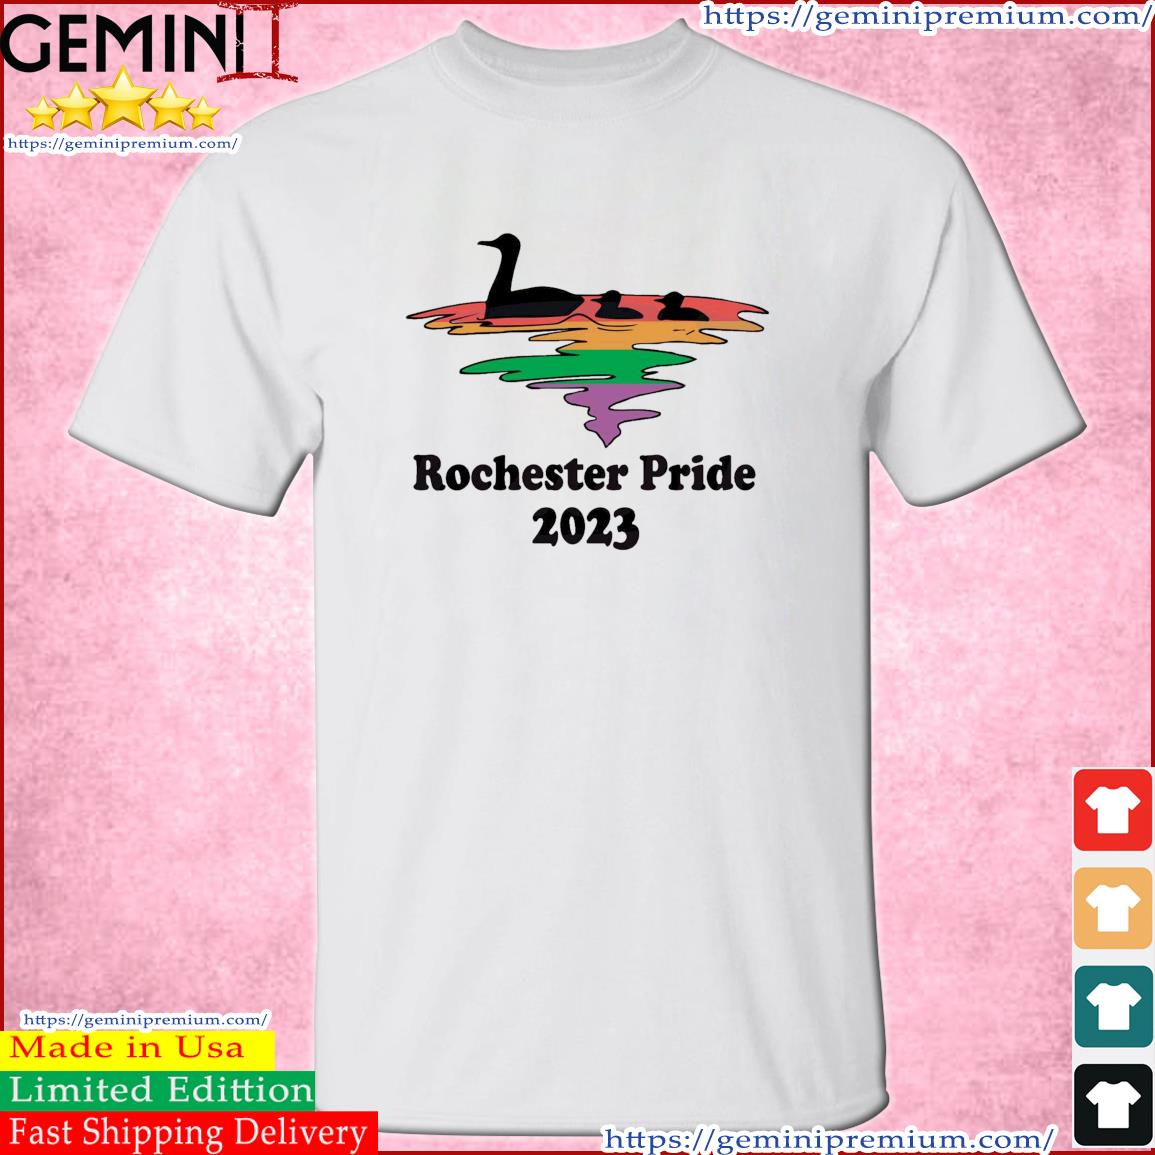 Rochester Pride 2023 Shirt